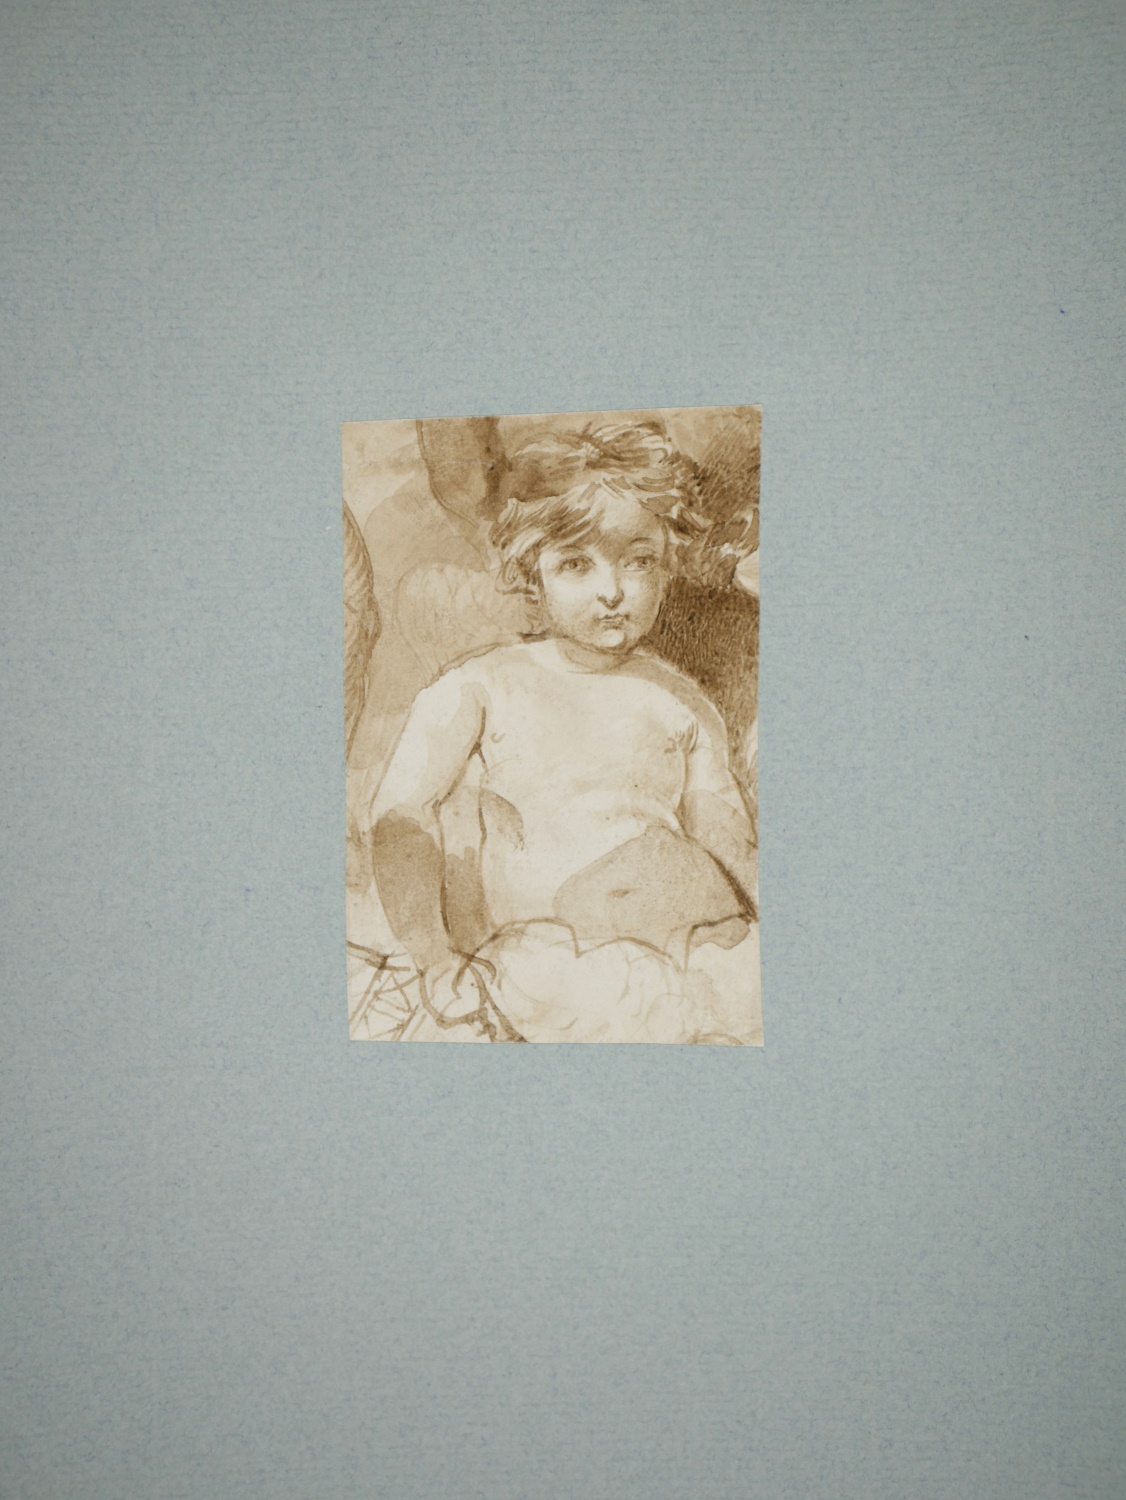 James Smetham – Portrait of a Young Boy